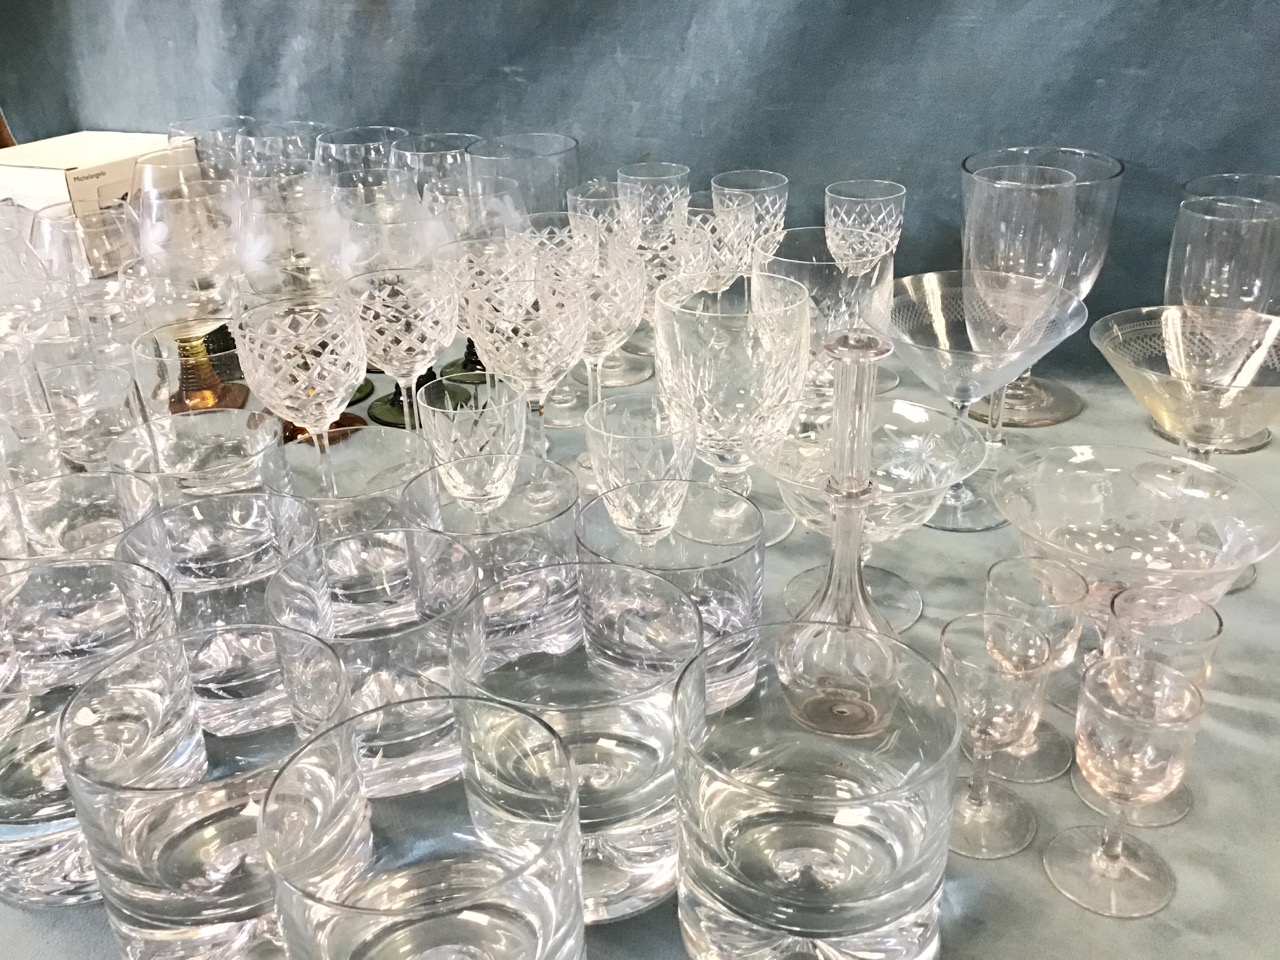 Miscellaneous glasses including sets of Edinburgh cut crystal, brandy balloons, tumblers, wine - Bild 2 aus 3